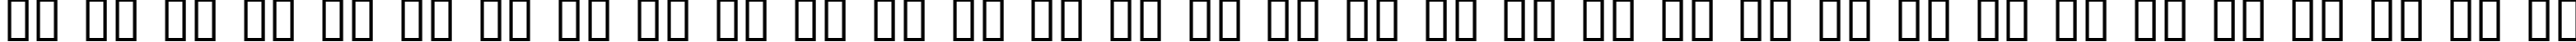 Пример написания русского алфавита шрифтом AunchantedXspace